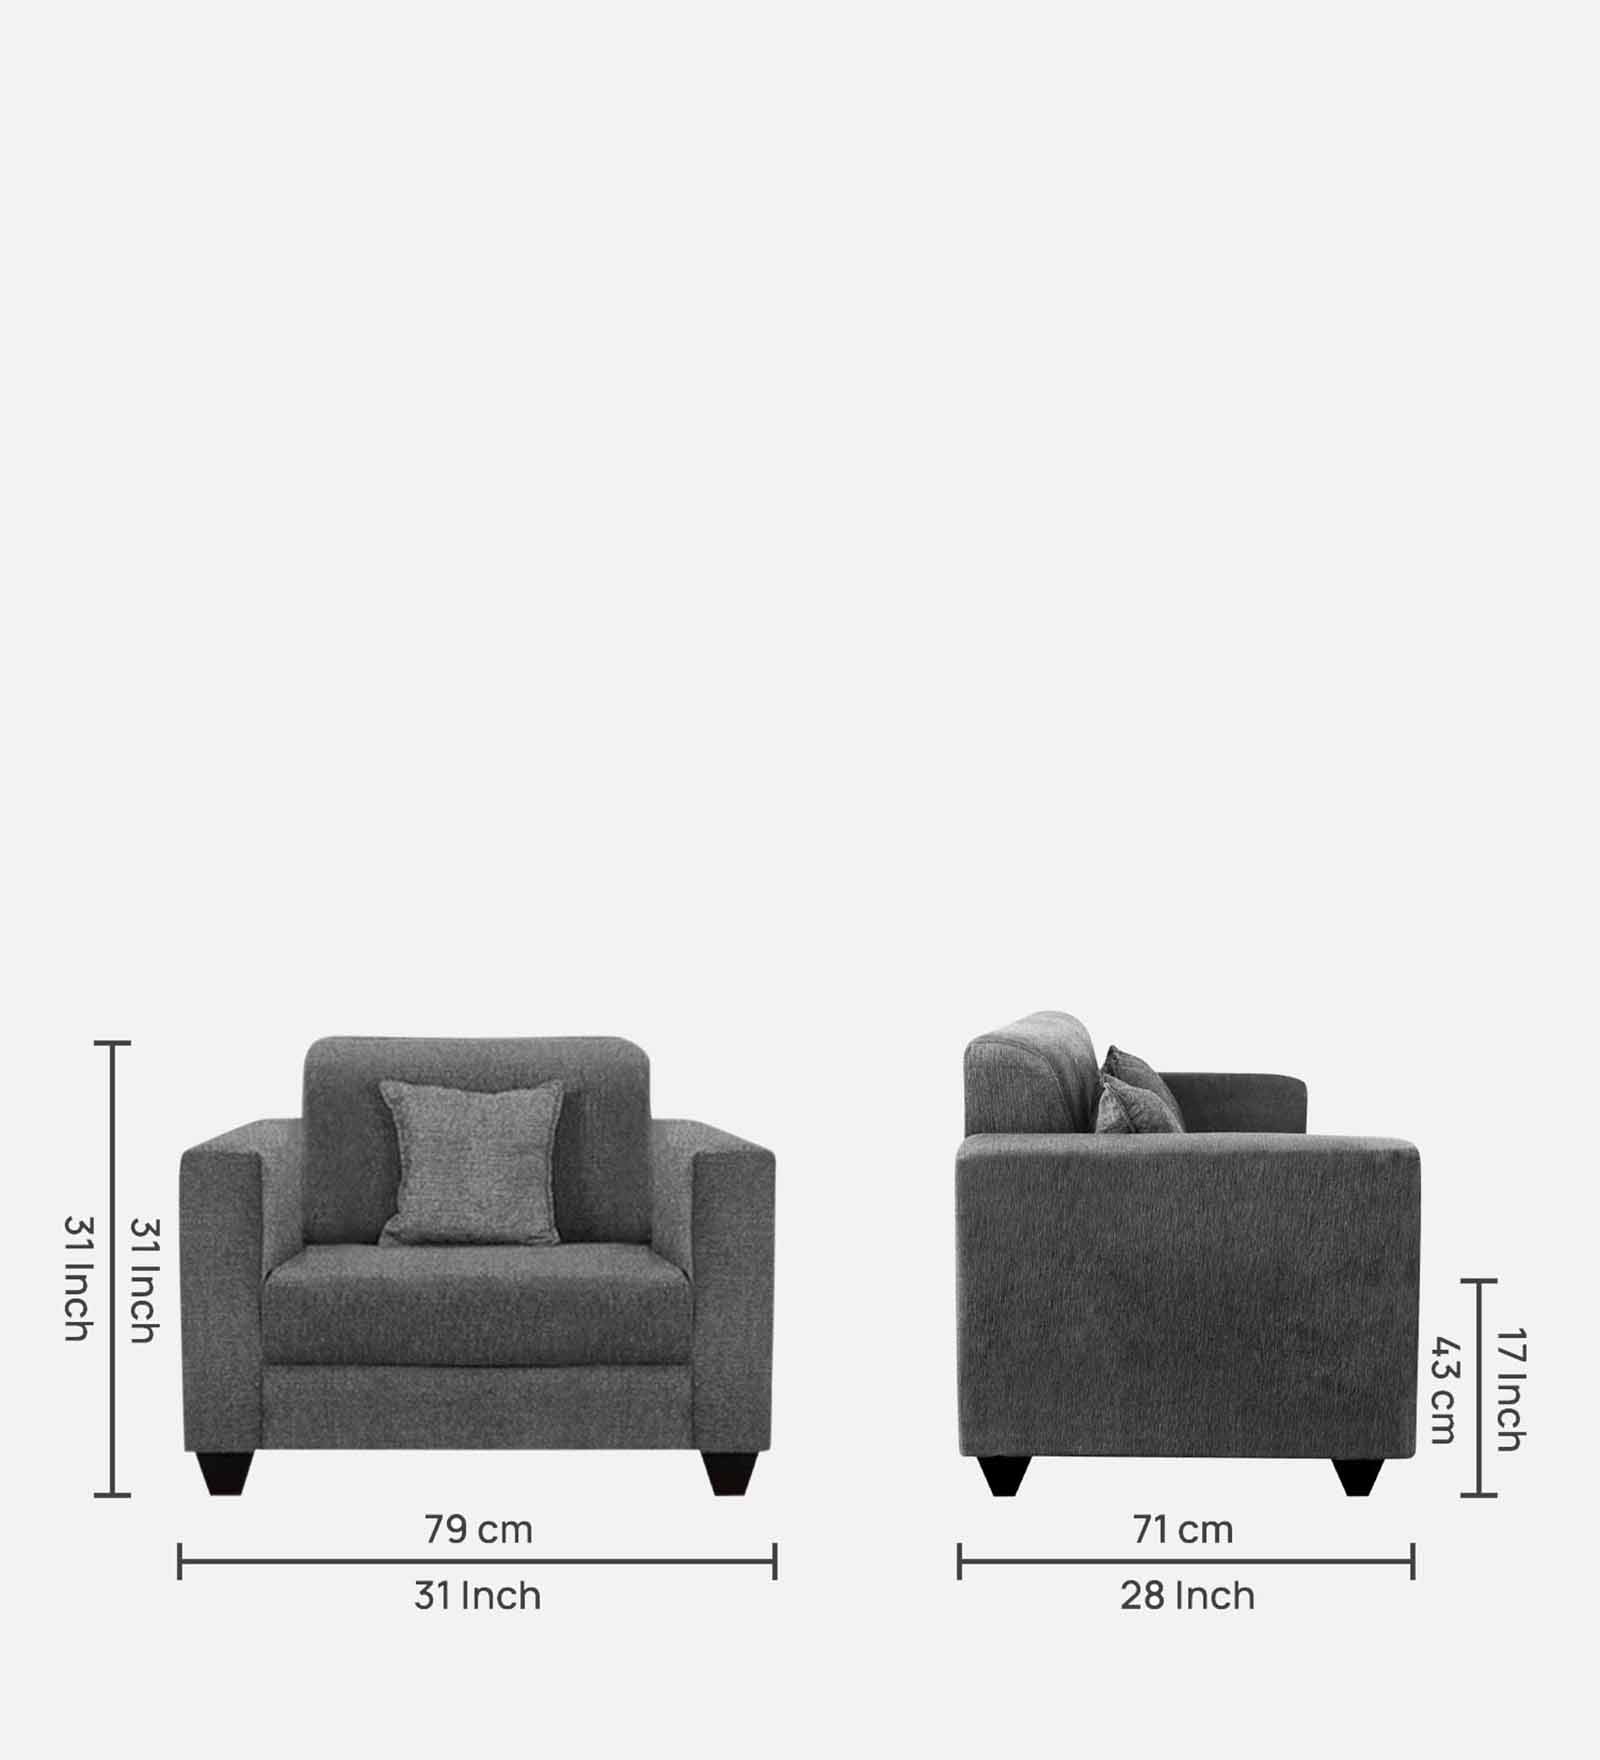 Nebula Fabric 1 Seater Sofa in Charcoal Grey Colour